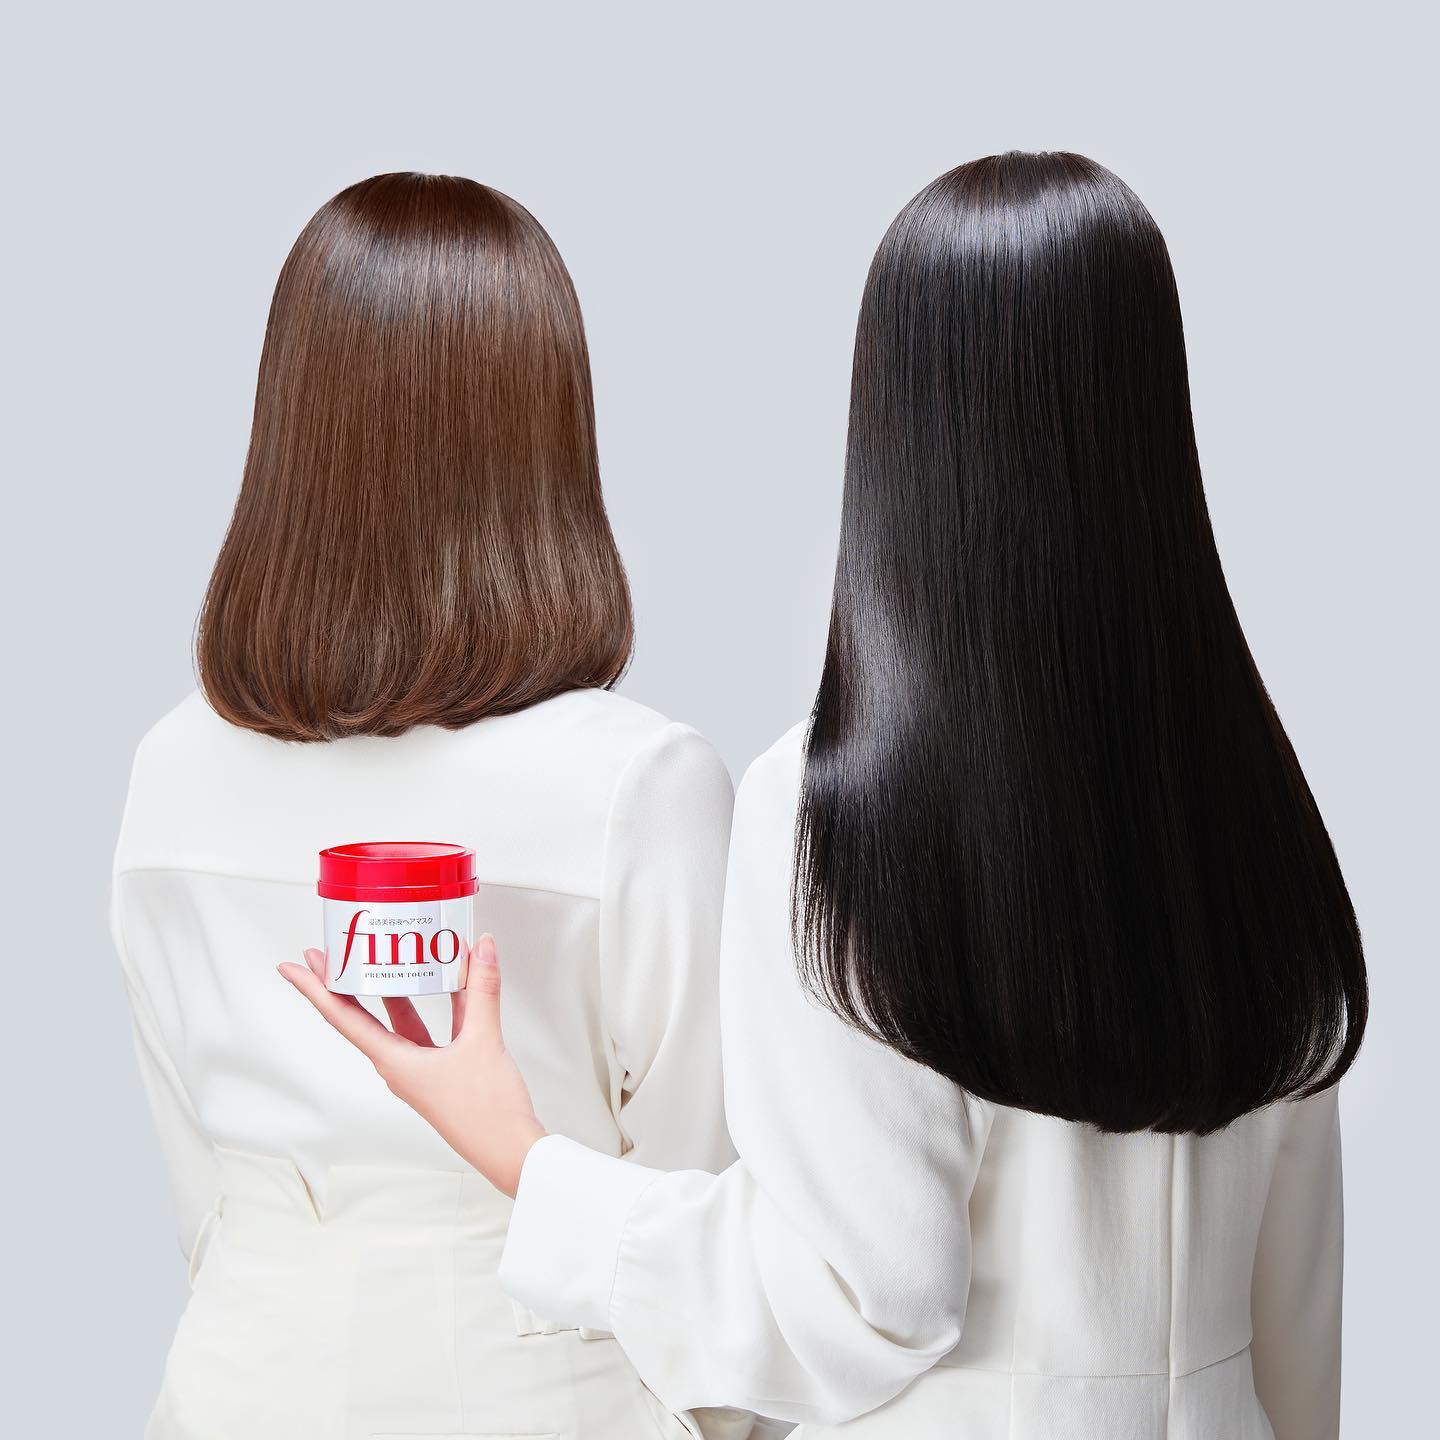 Fino Premium Touch Hair Essence Mask 230g | Shiseido